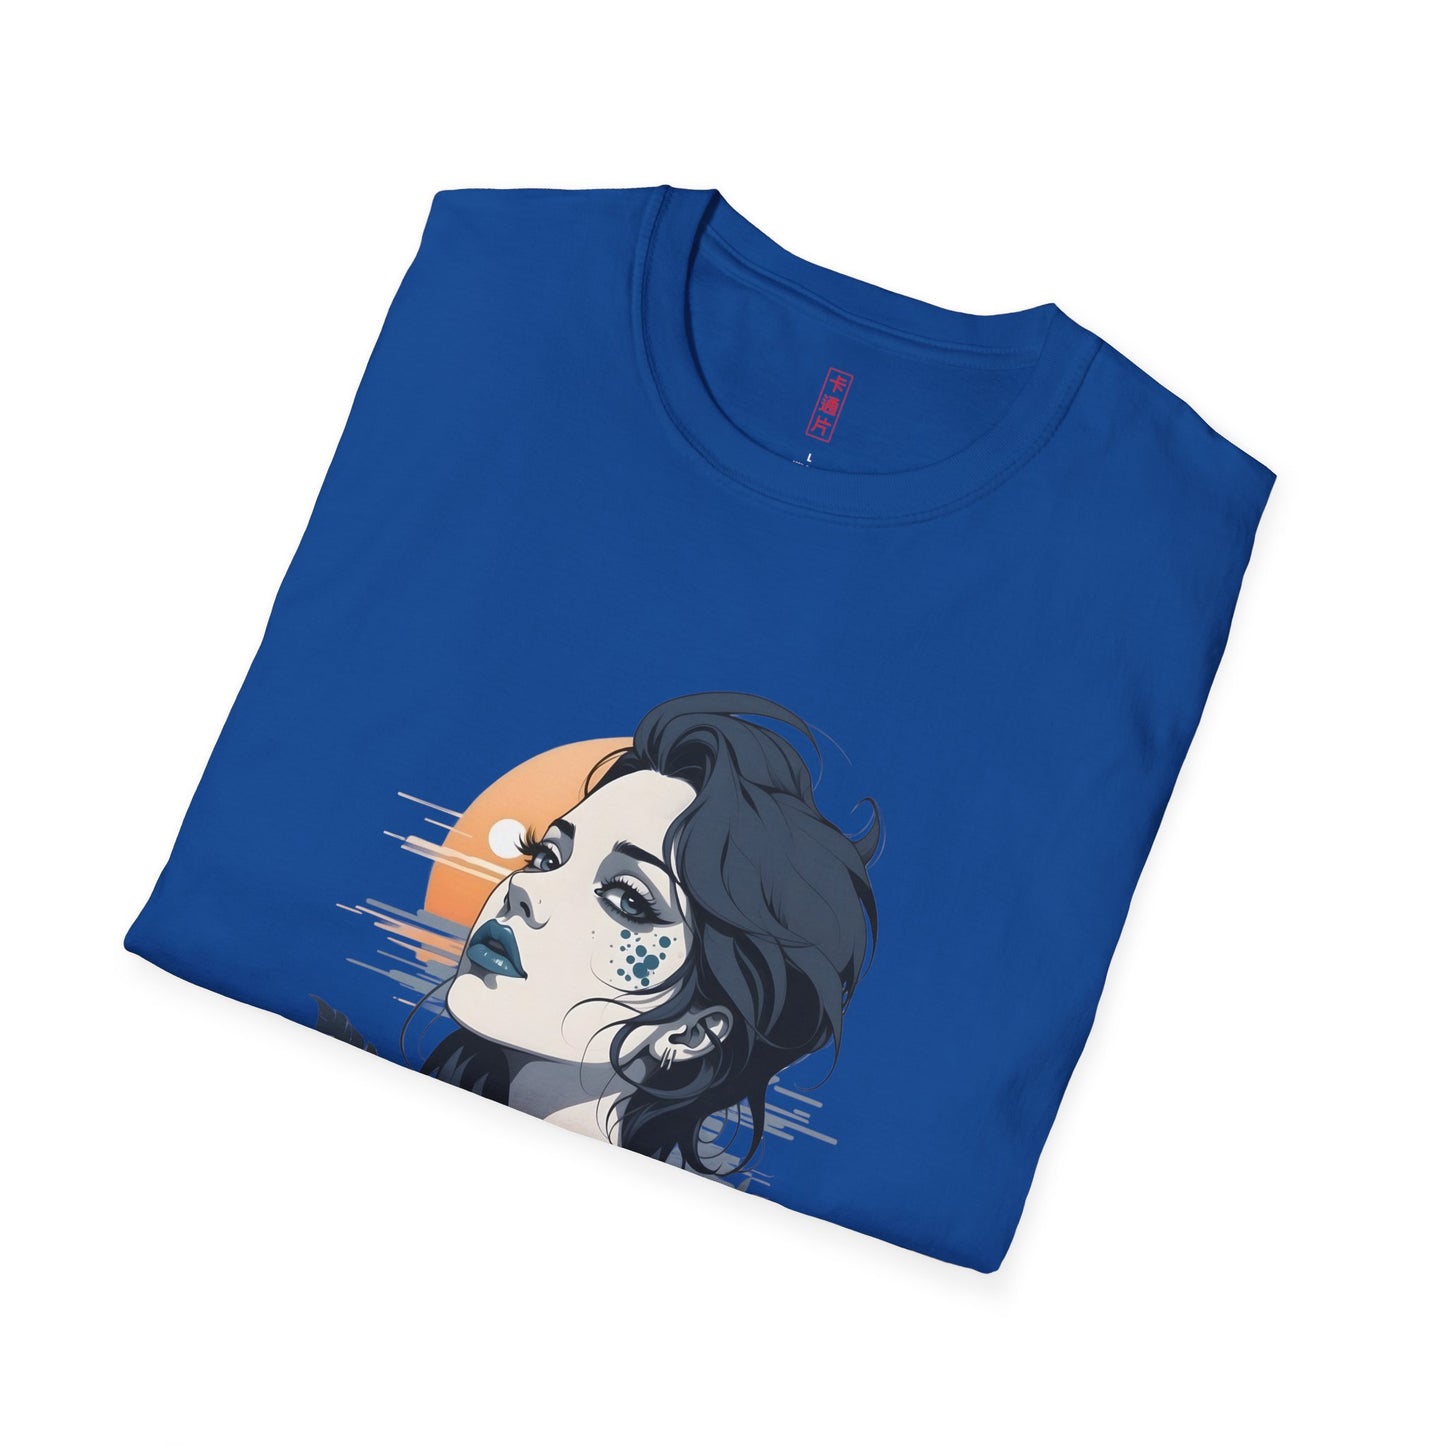 Kǎtōng Piàn - California Love Collection - 020 - Unisex Softstyle T-Shirt Printify